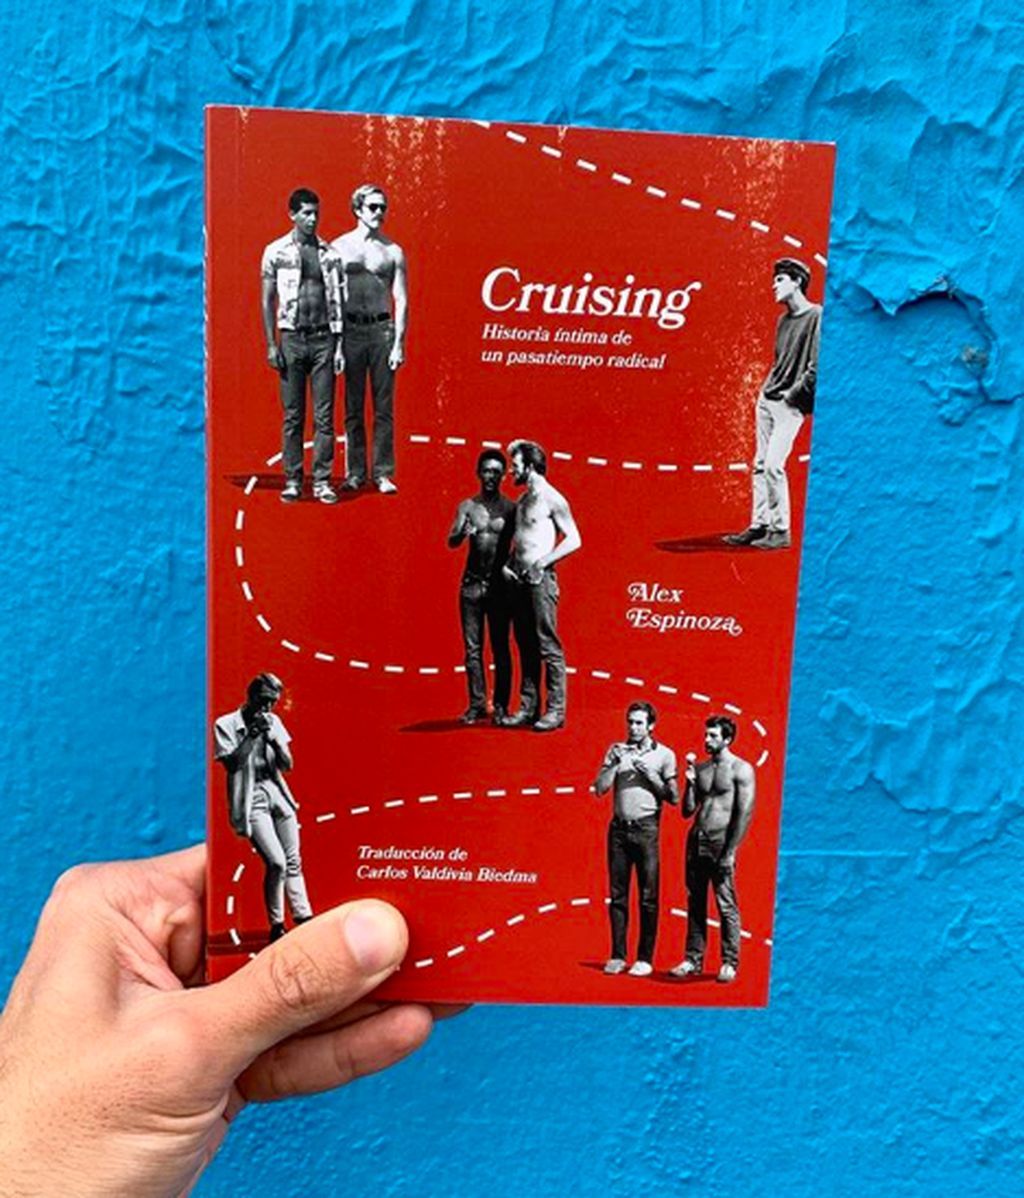 Cruising, historia íntima de un pasatiempo radical